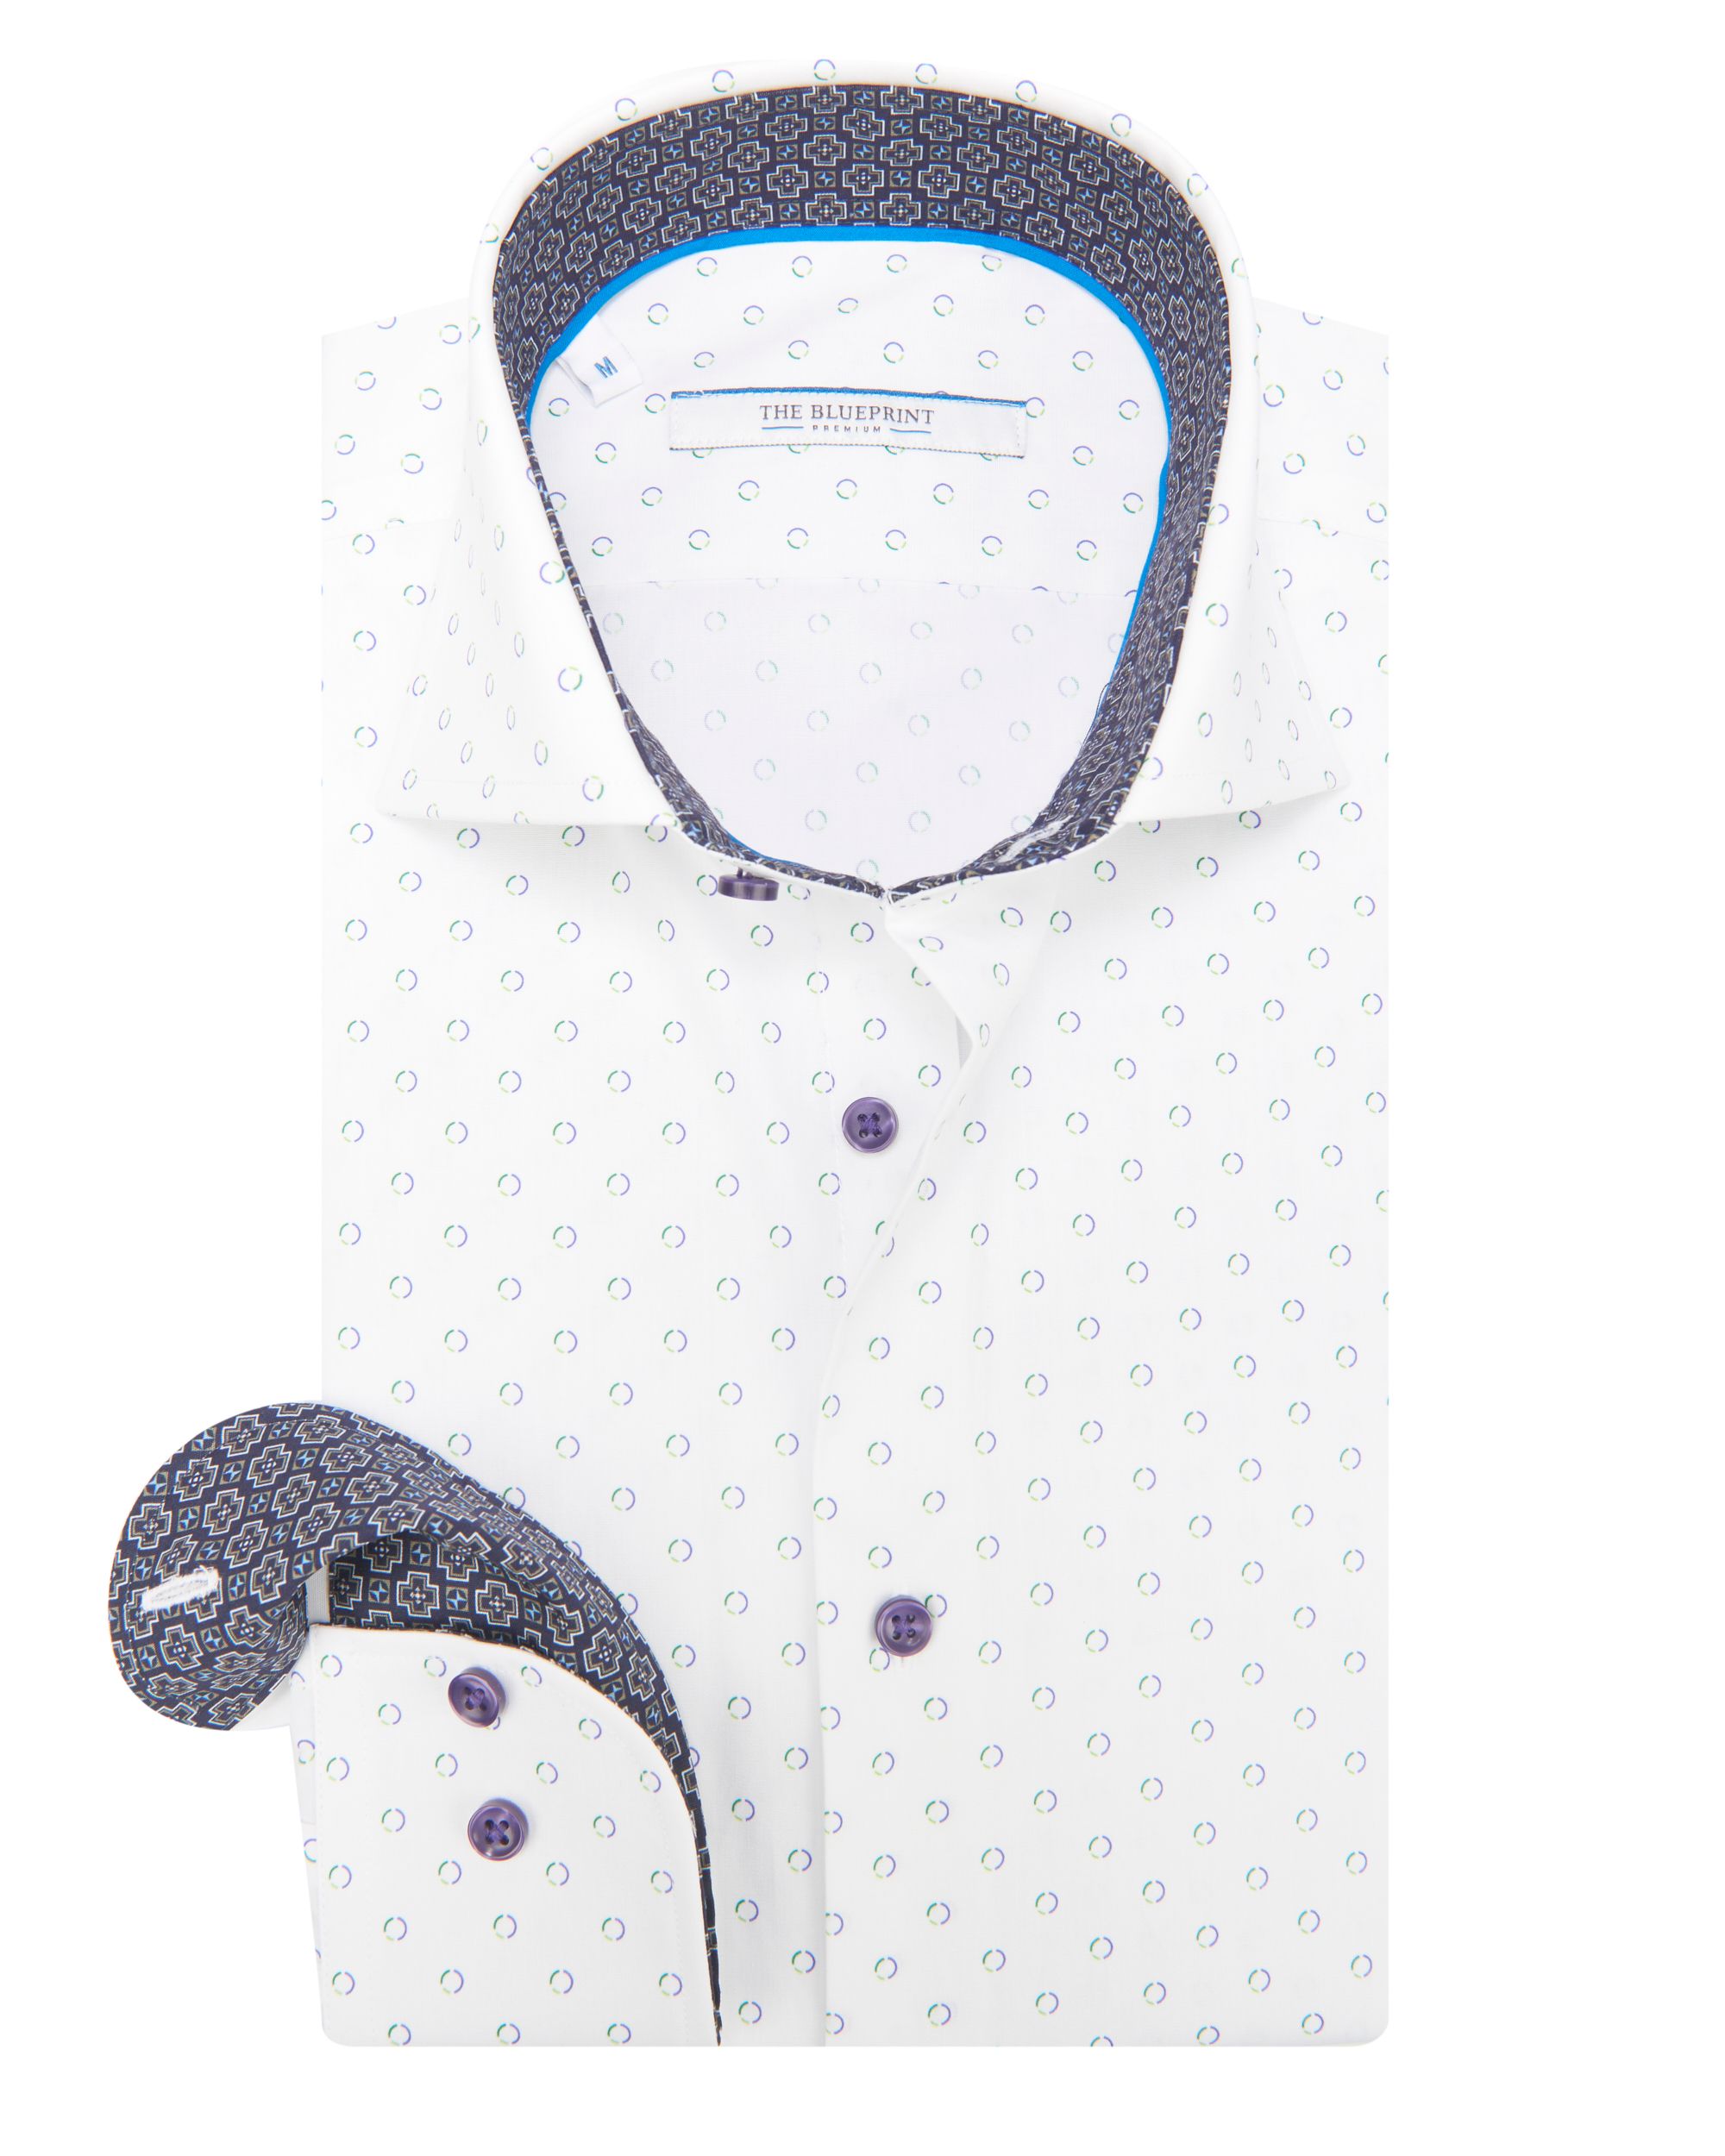 The BLUEPRINT Premium Trendy Overhemd LM Blauw stip  078186-001-L